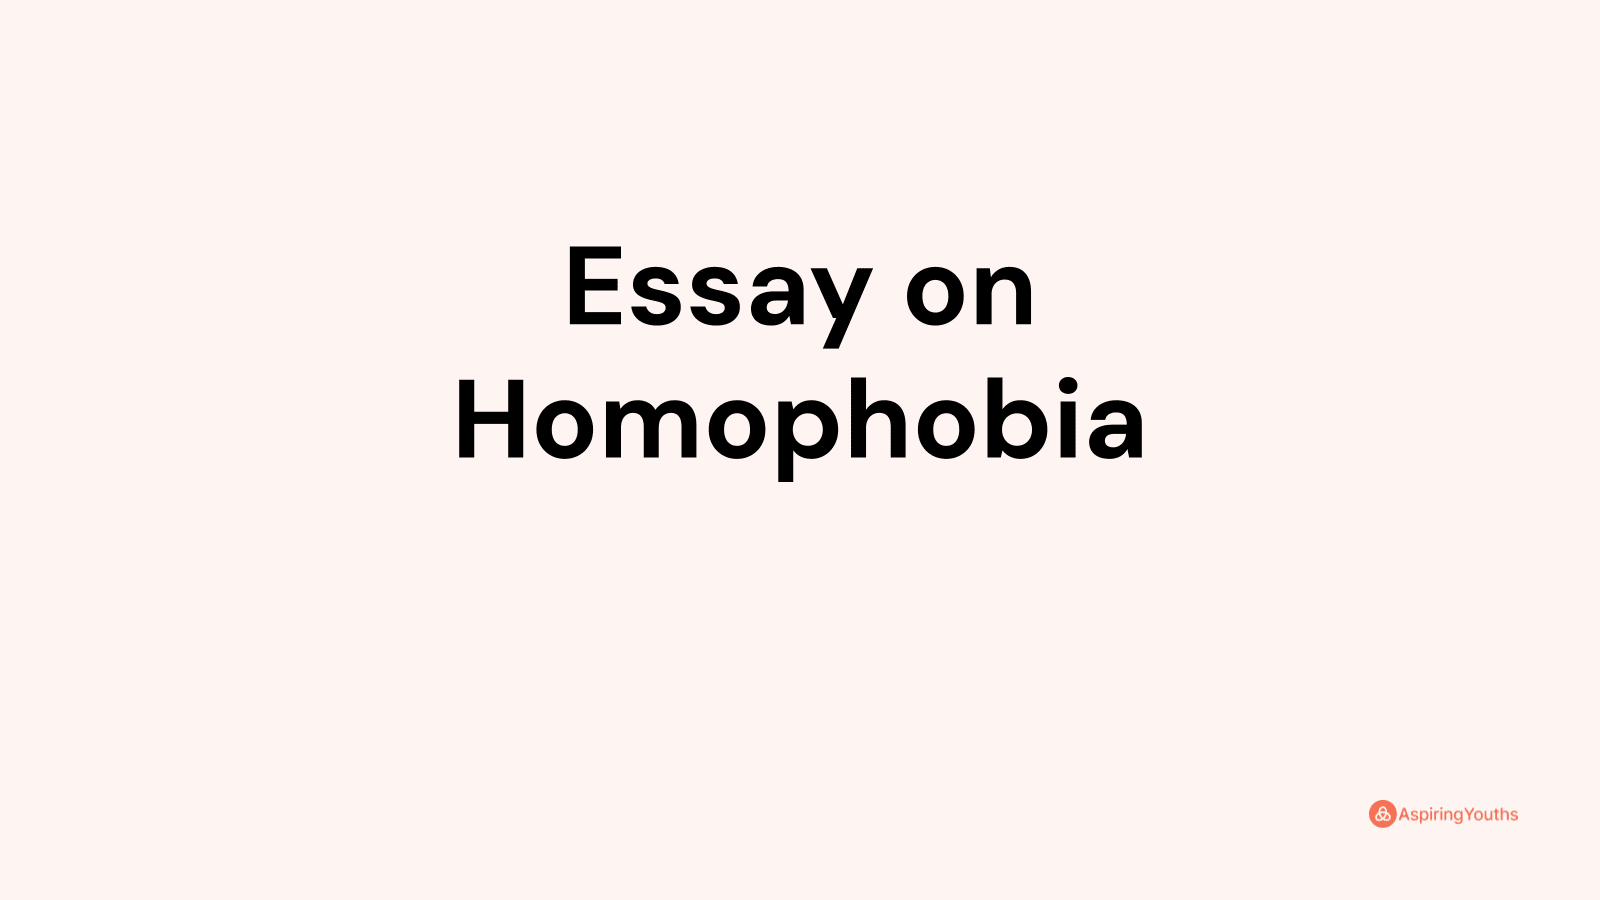 Essay on Homophobia